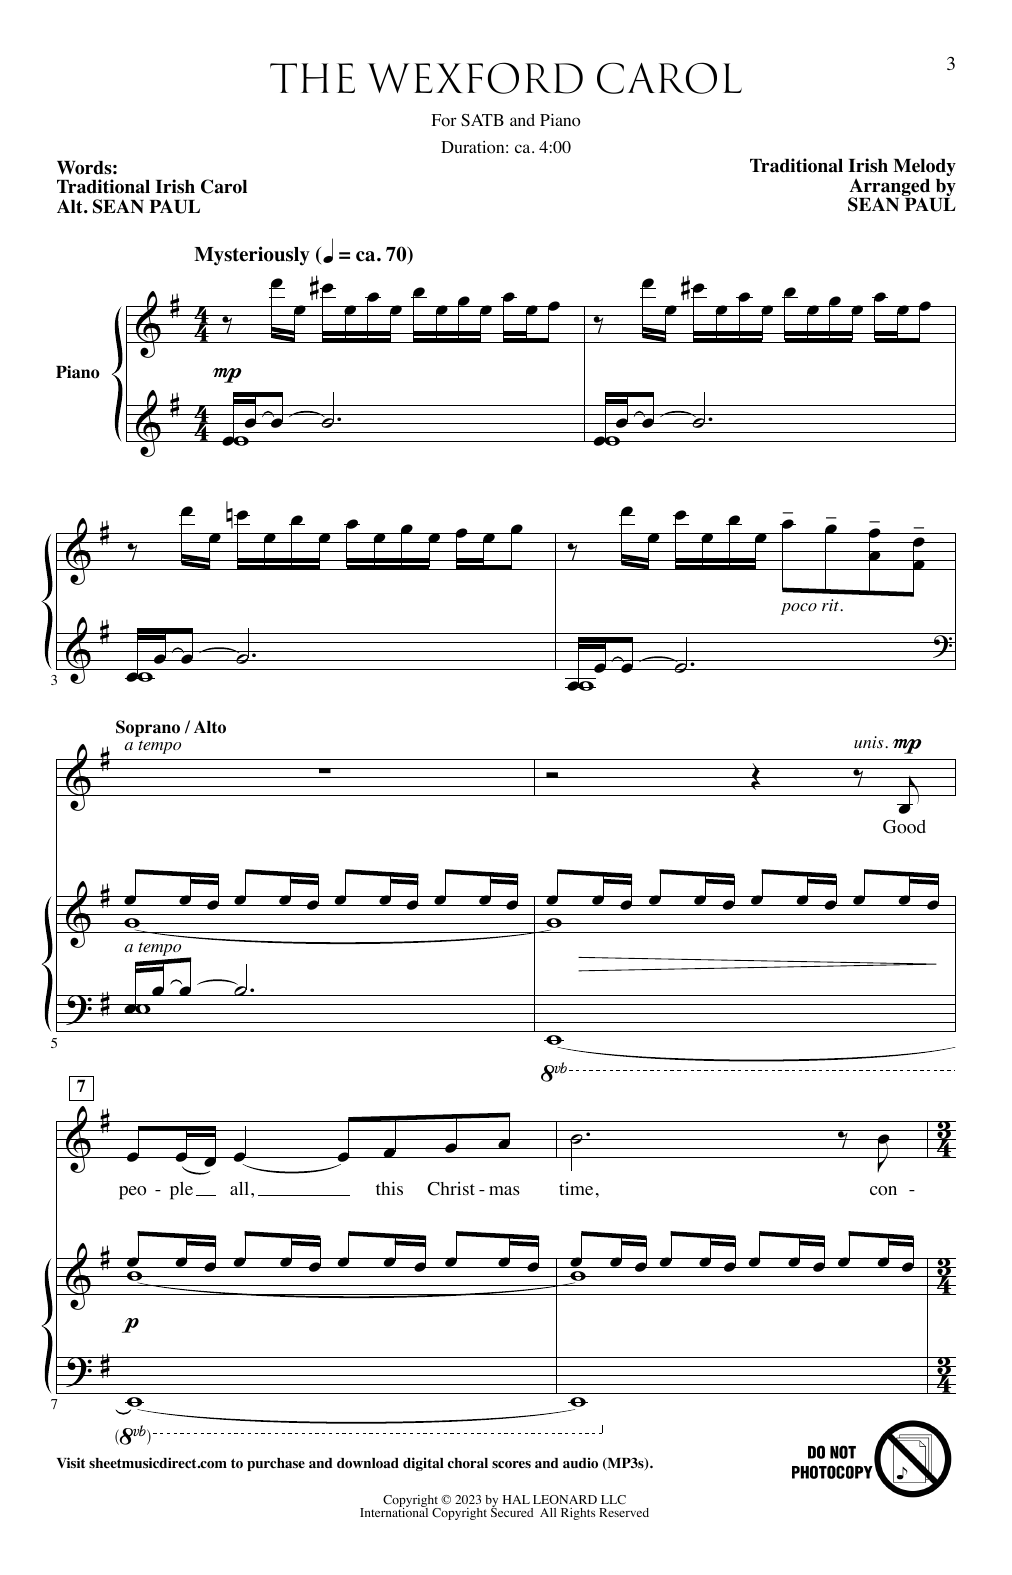 Traditional Irish Carol The Wexford Carol (arr. Sean Paul) Sheet Music Notes & Chords for SATB Choir - Download or Print PDF